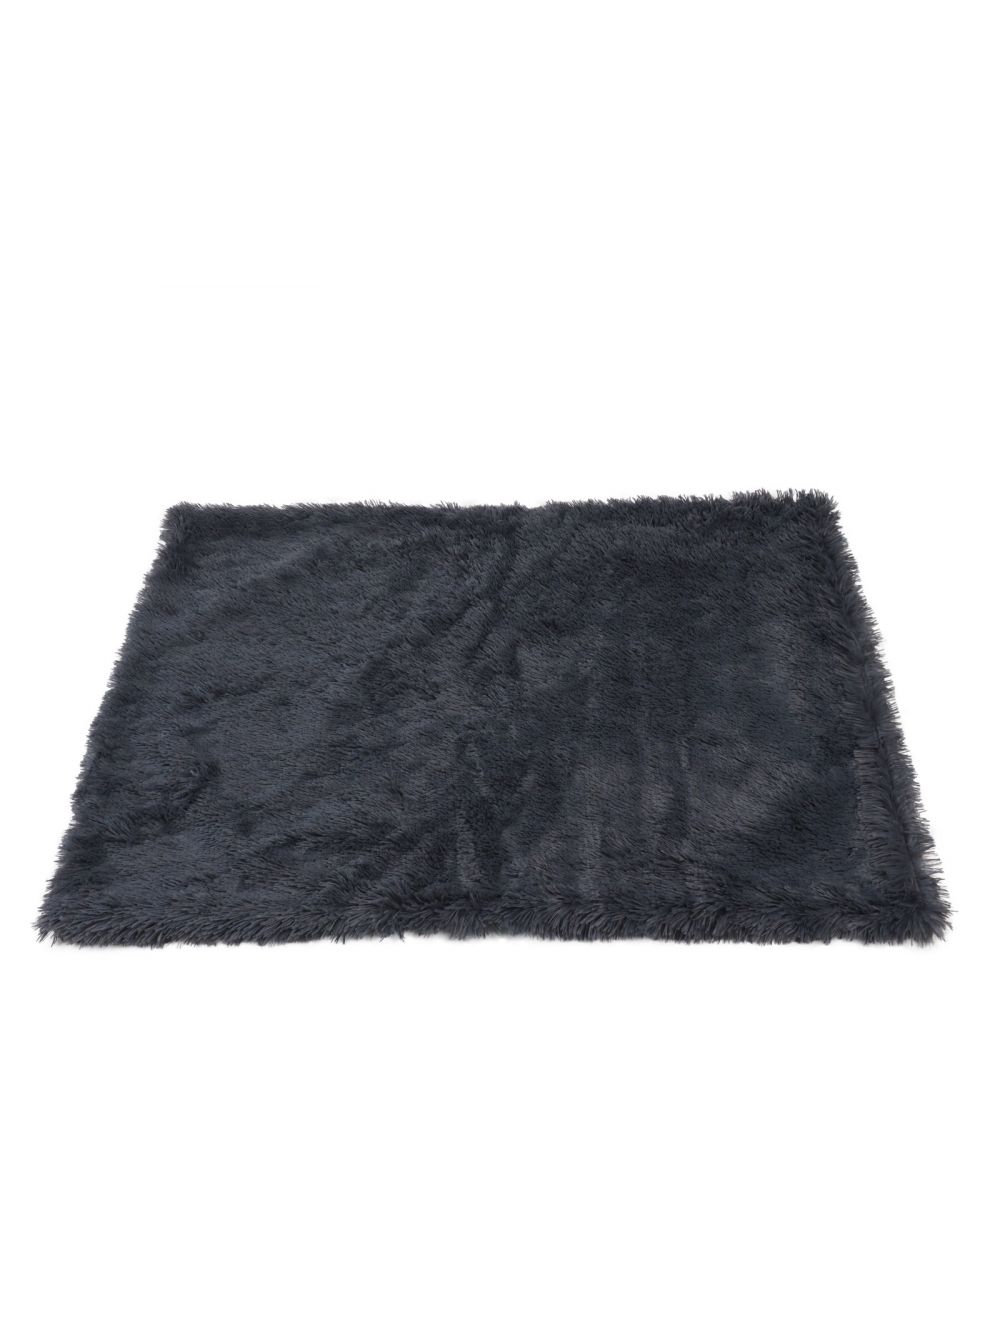 Fluffy - Sofa blanket Anthracite 100x70cm - (697271866475)